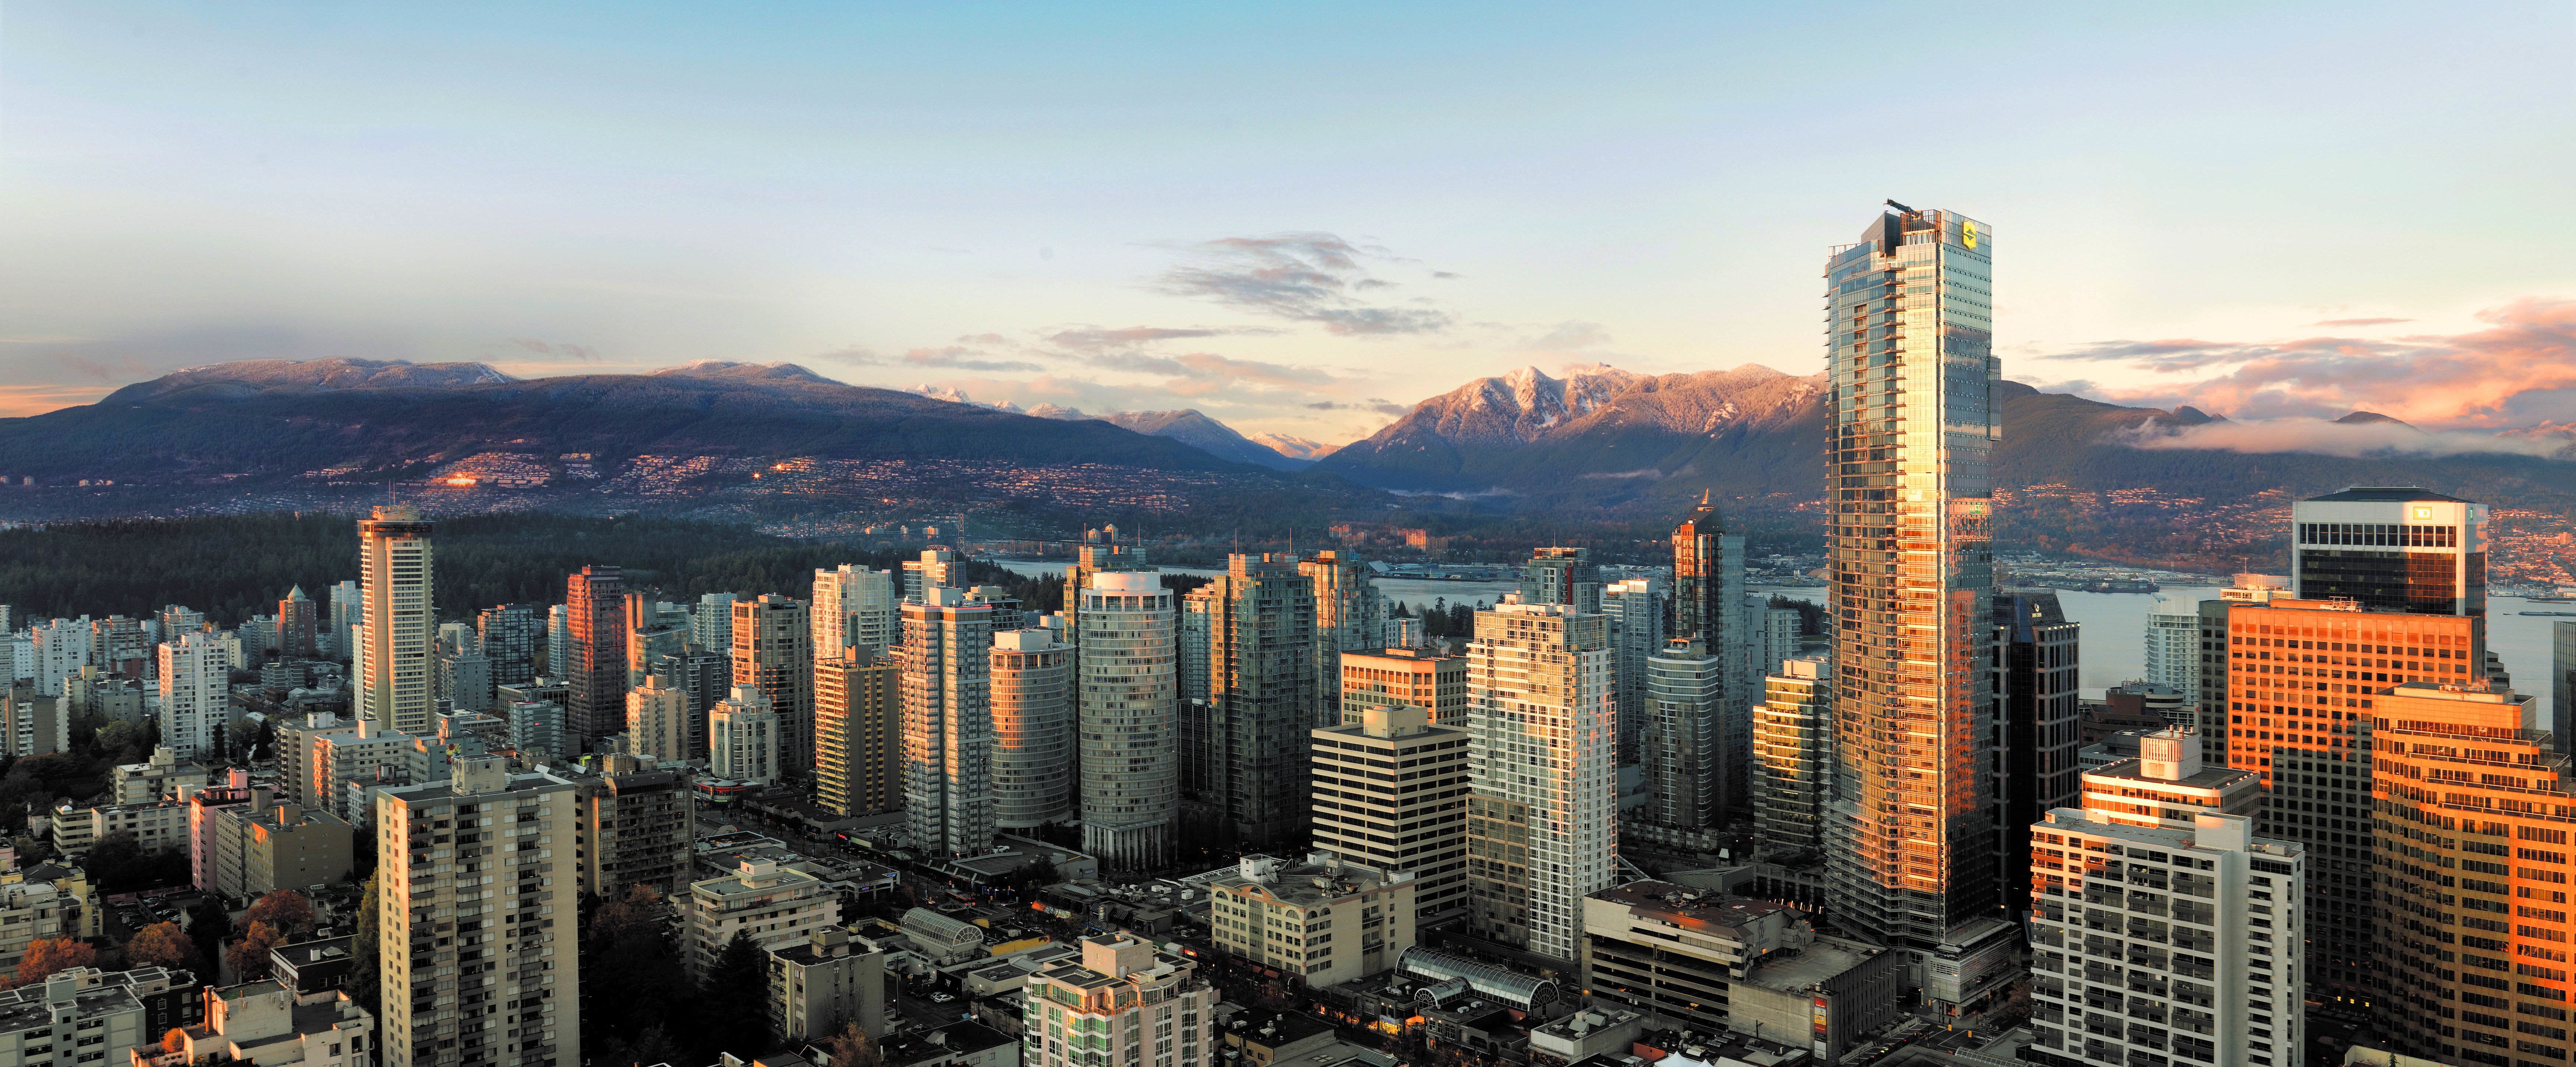 Skyline von Vancouver, British Columbia